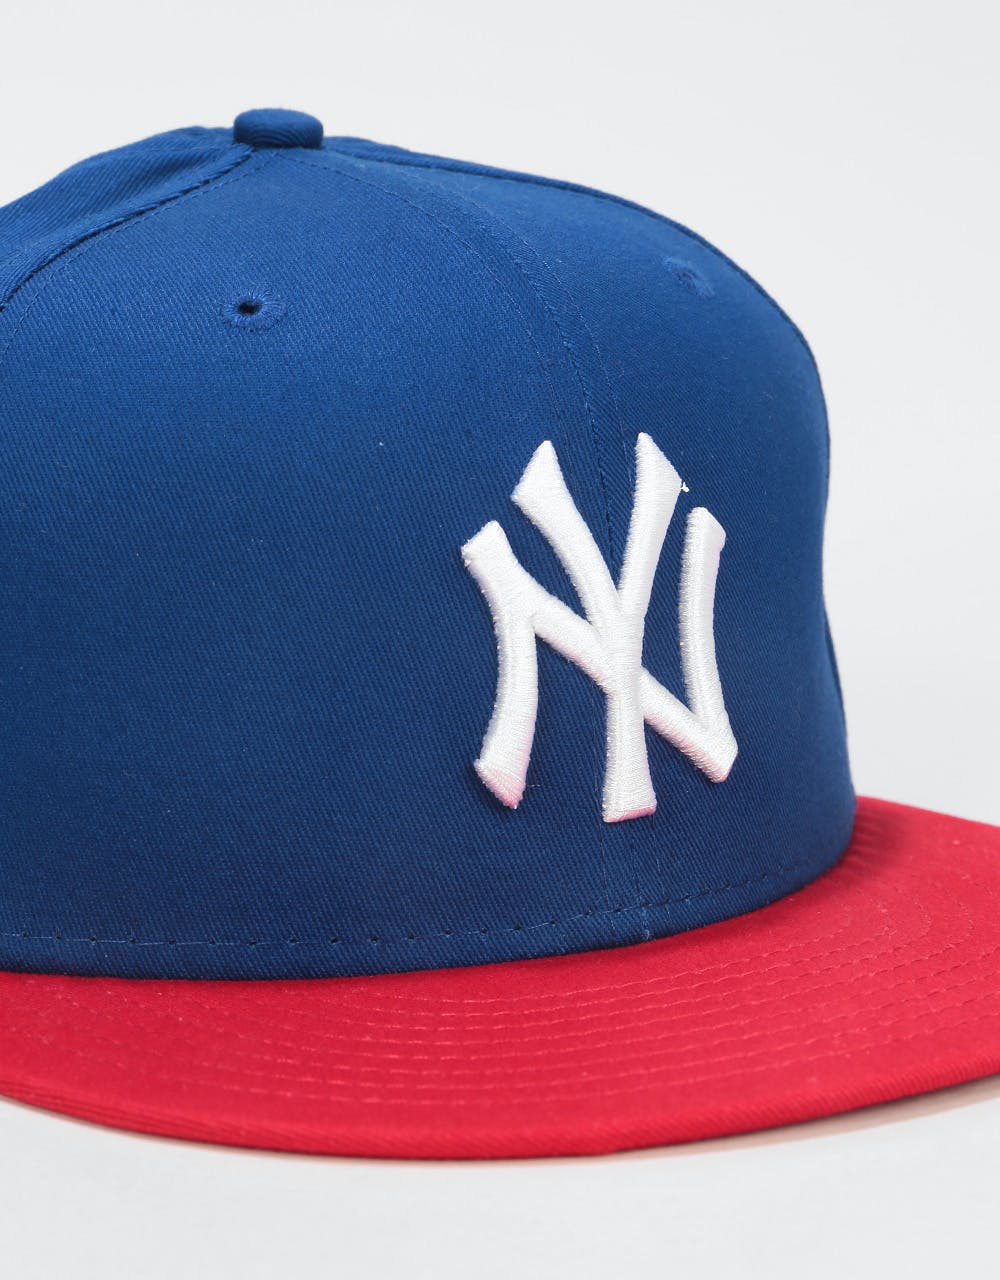 New Era 9Fifty MLB New York Yankees Cotton Block Snapback Cap - Royal/